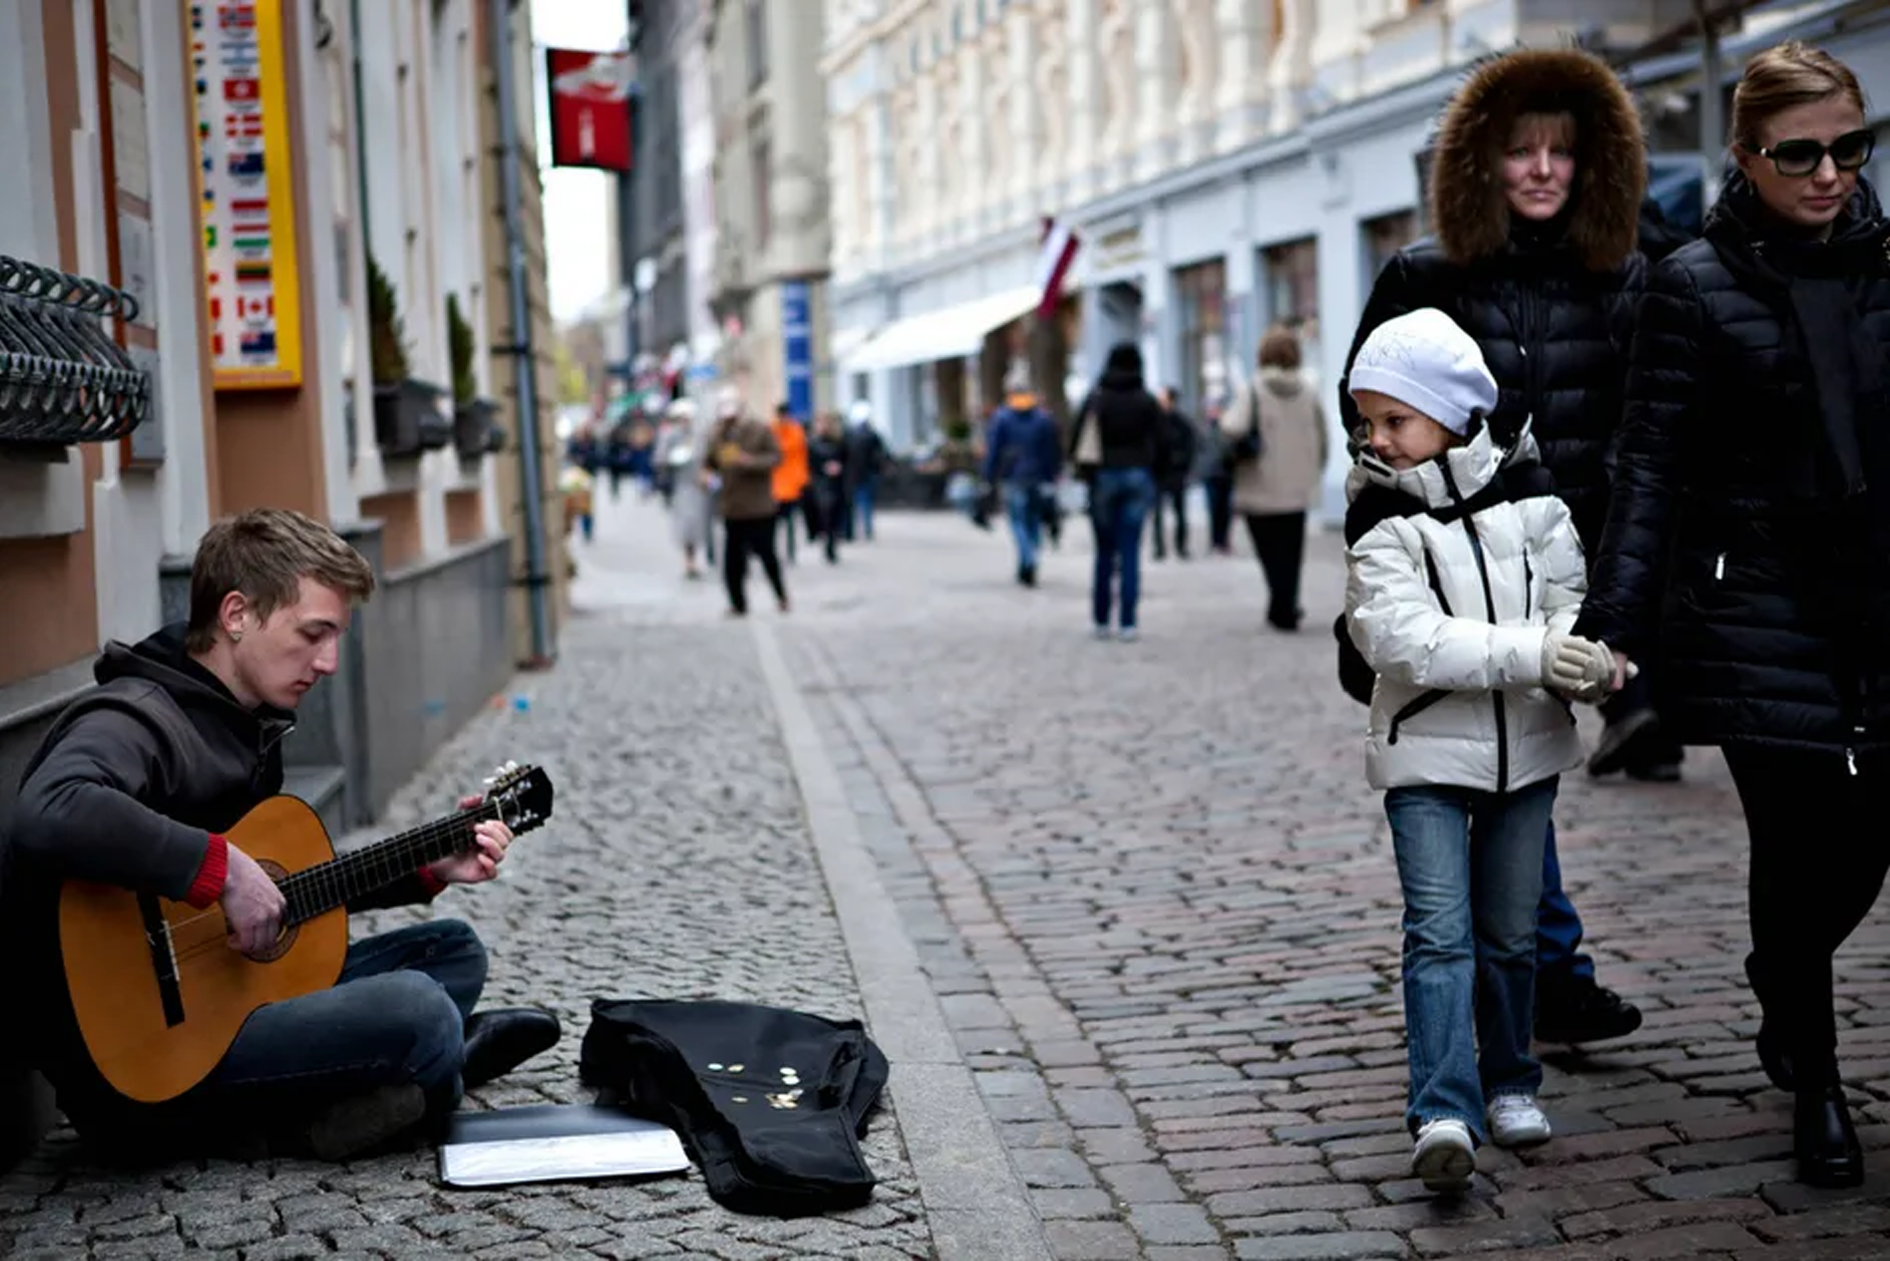 Ny forening har overtaget gademusikerfestivalen (fra Lokalavisen Norddjurs)